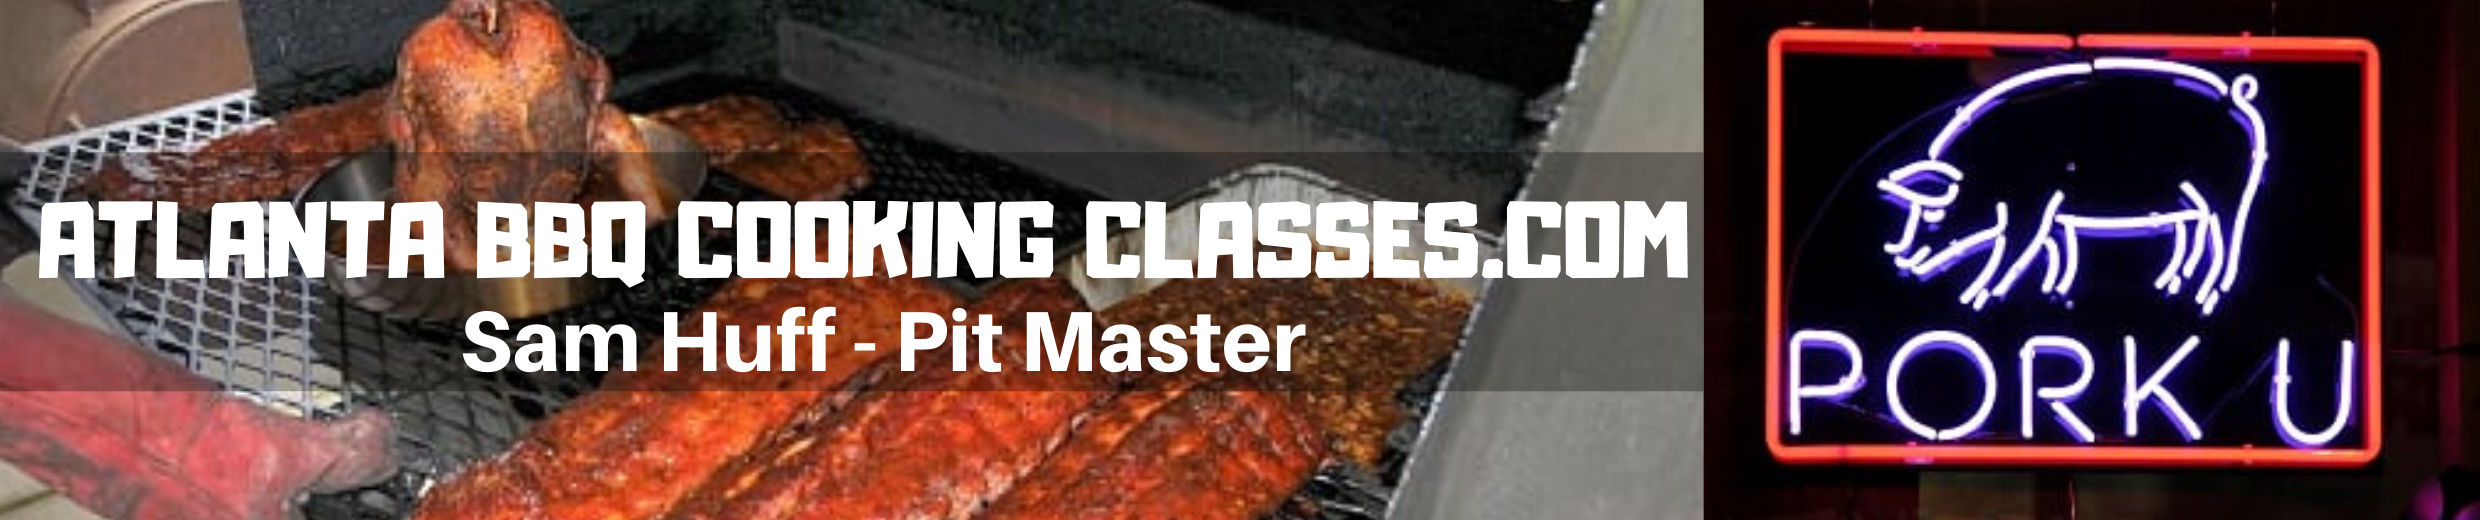 Atlanta BBQ Cooking Classess